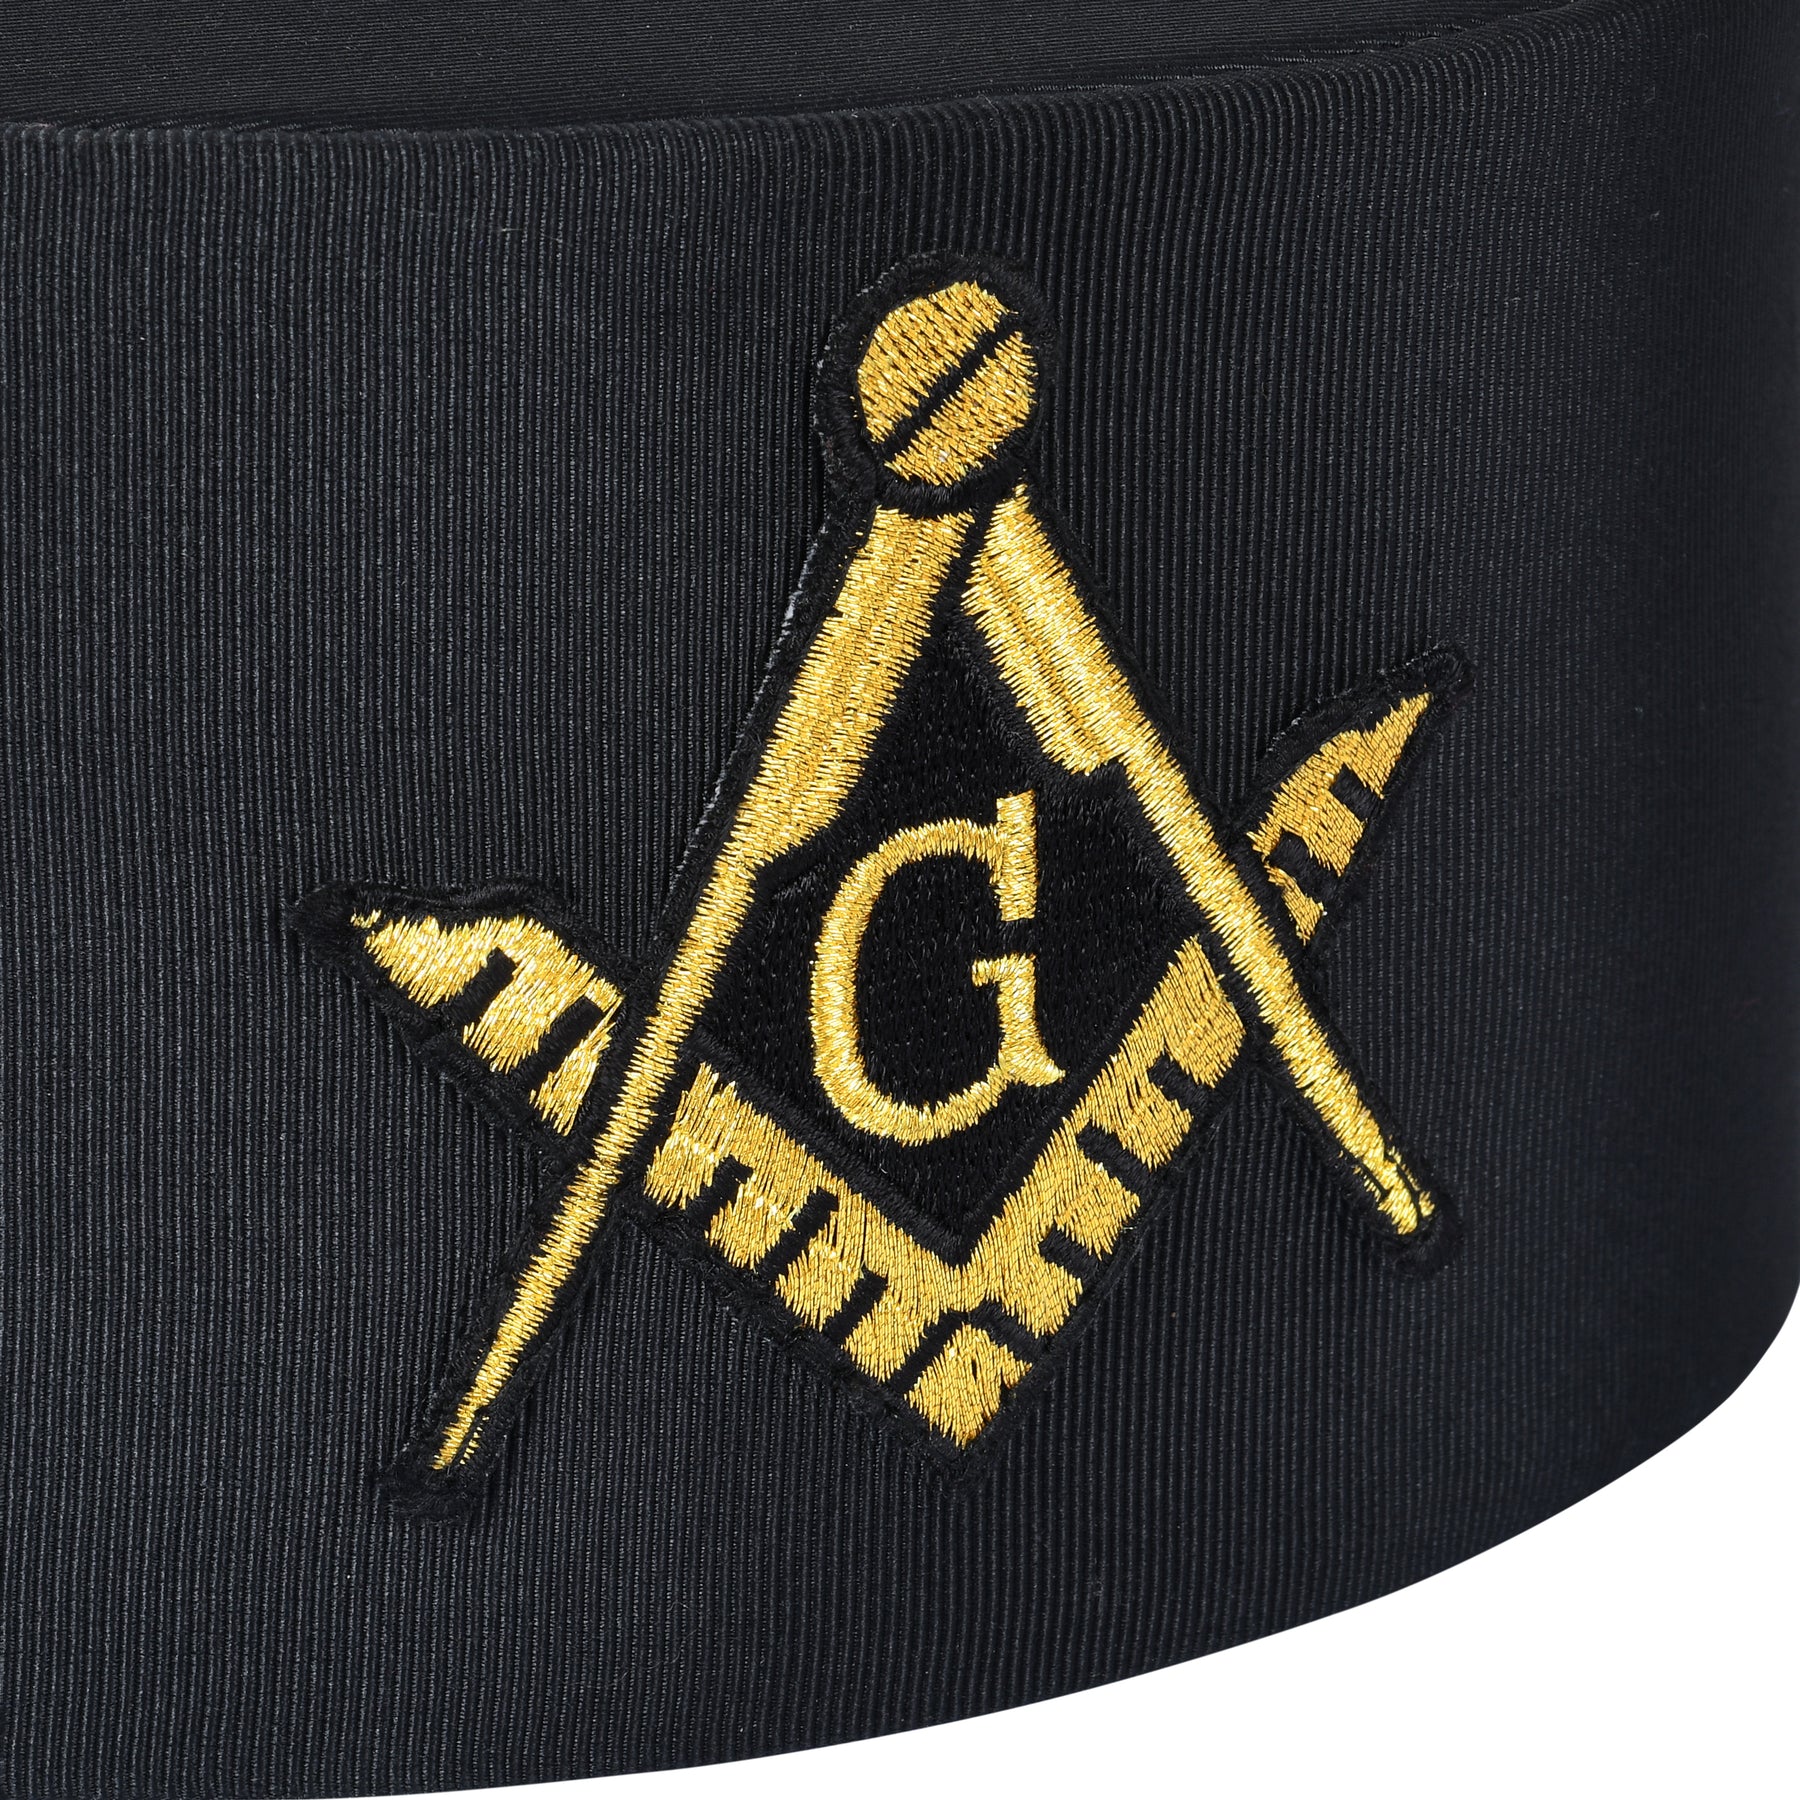 Master Mason Blue Lodge Crown Cap - Black rayon - Bricks Masons